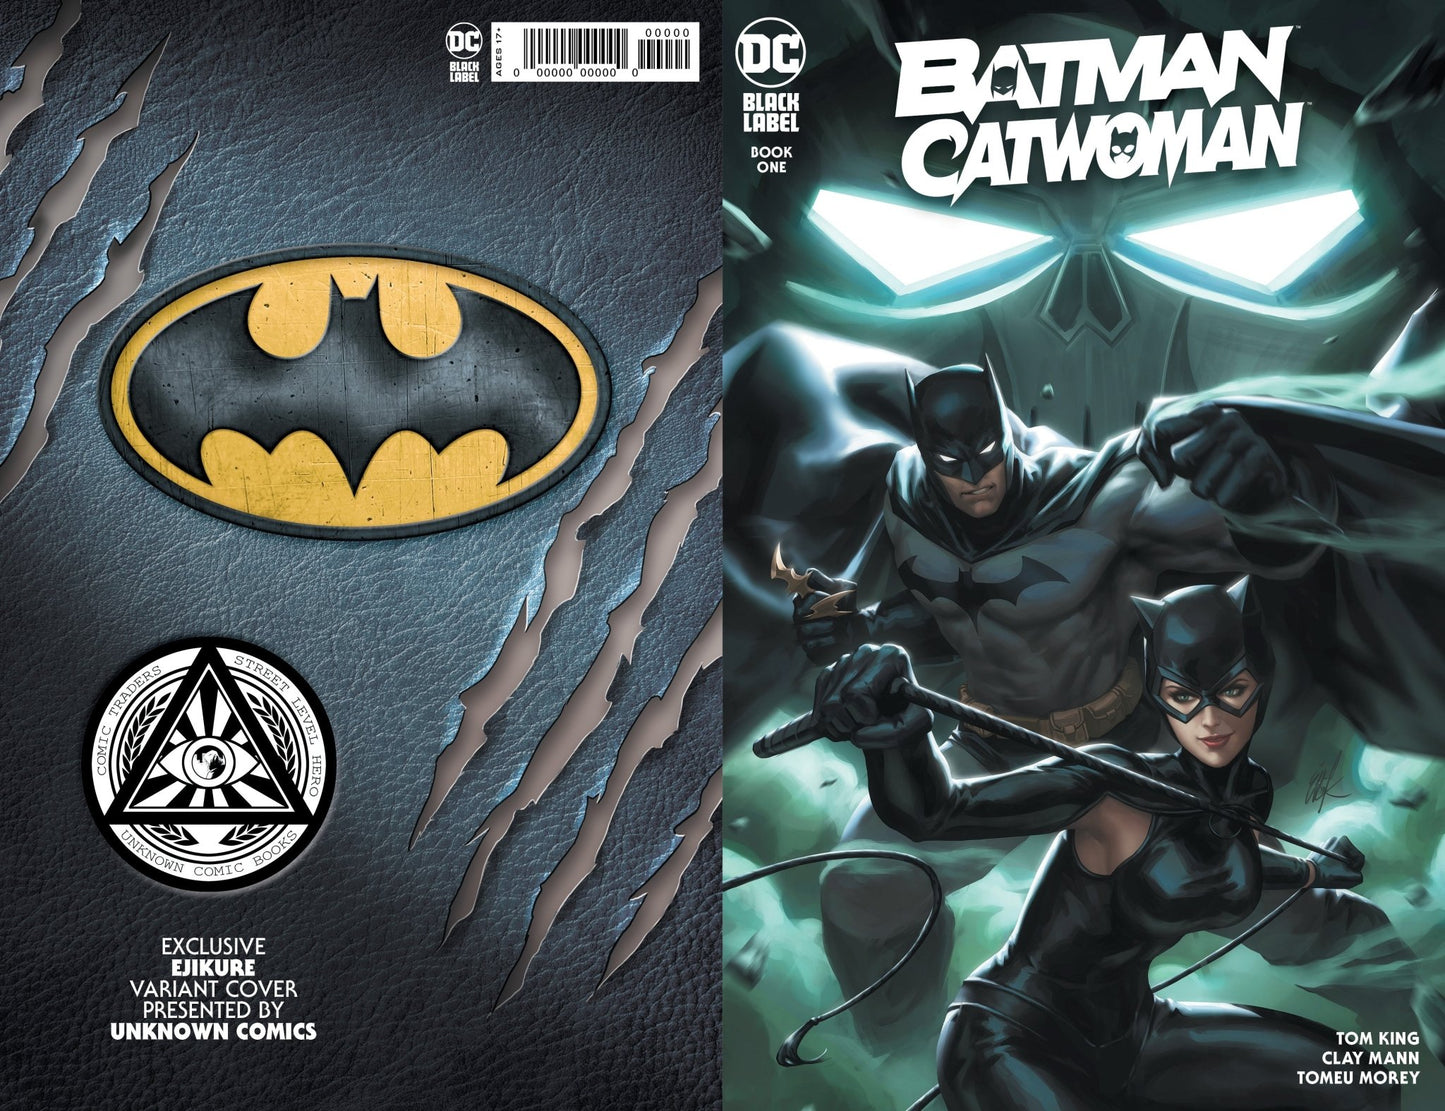 BATMAN CATWOMAN #1 (OF 12) UNKNOWN COMICS EJIKURE EXCLUSIVE VAR (12/02/2020) - FURYCOMIX